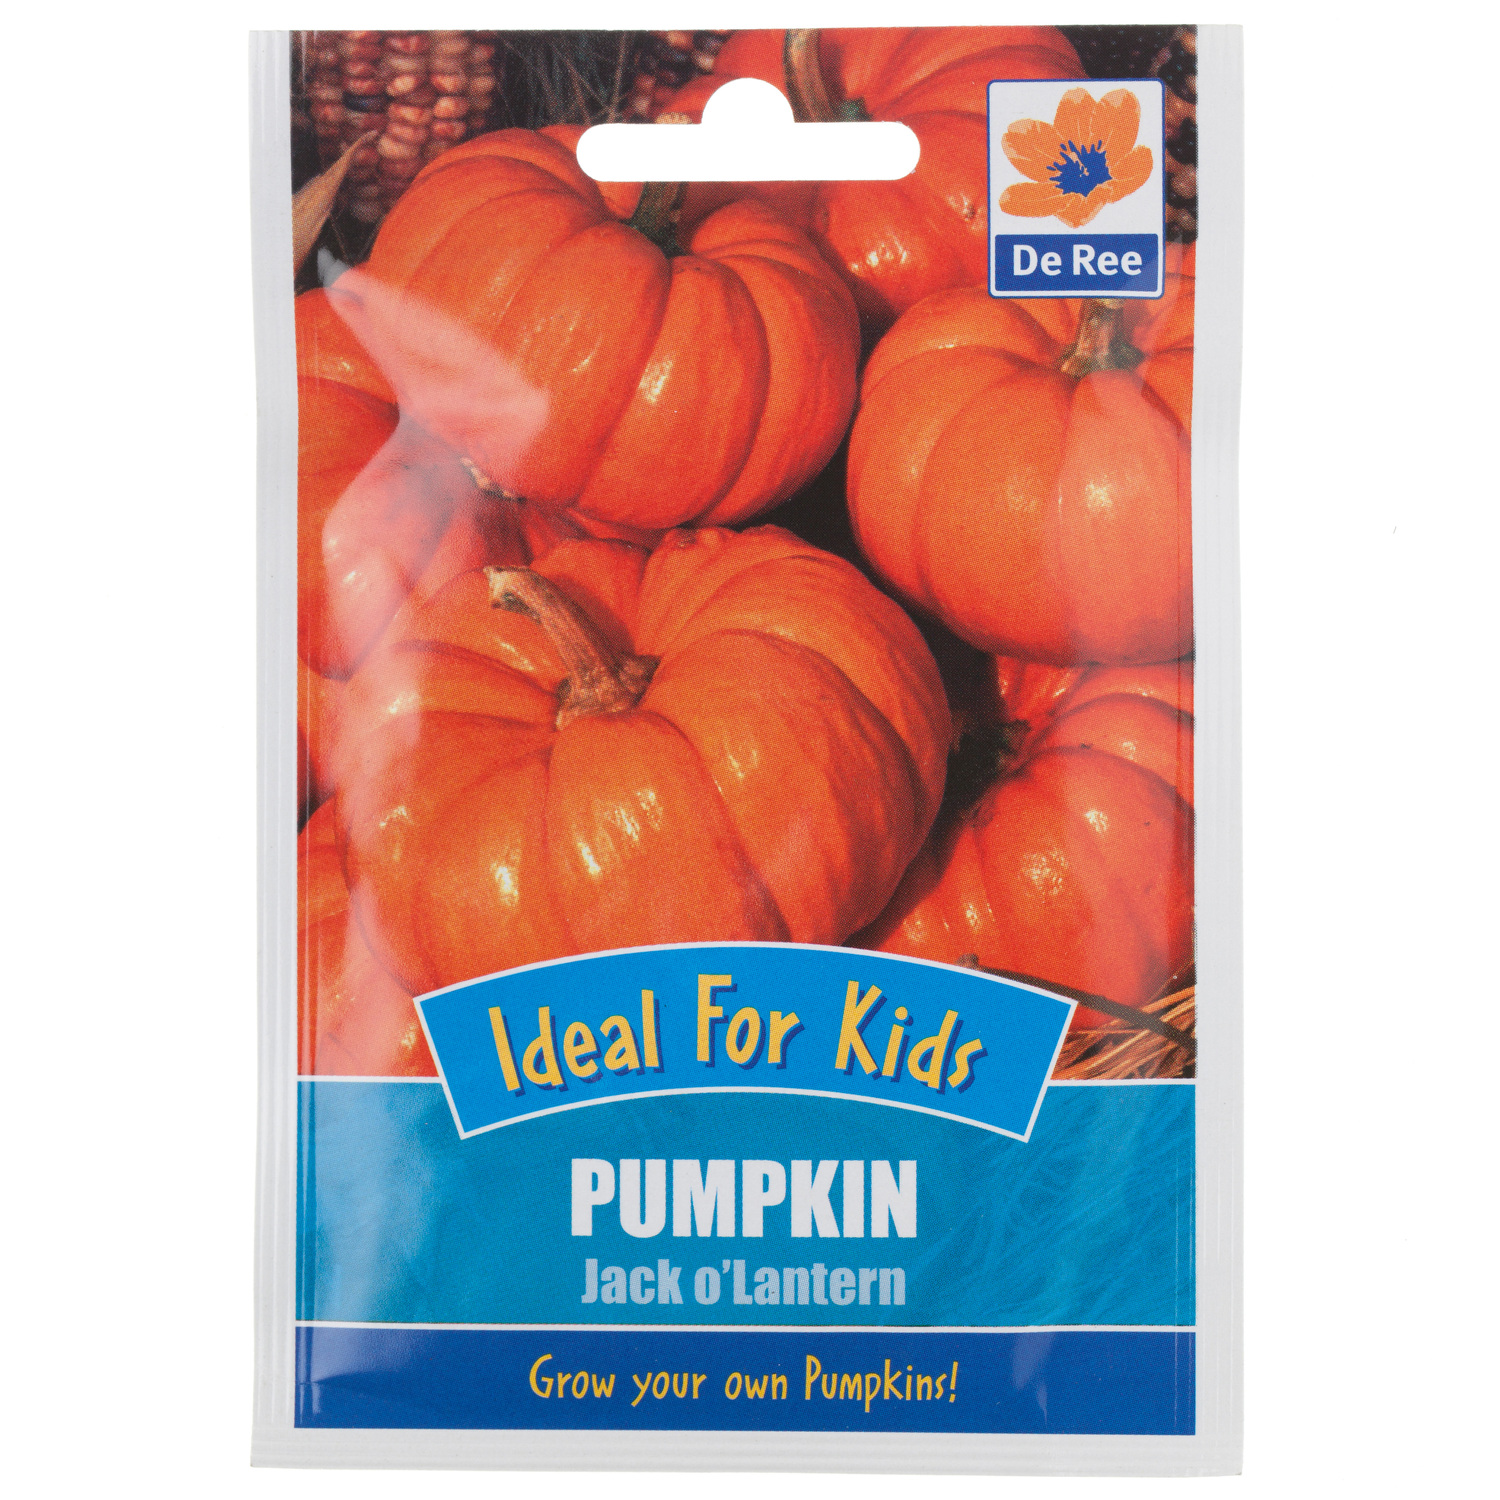 Pumpkin Jack O'Lantern Seeds Image